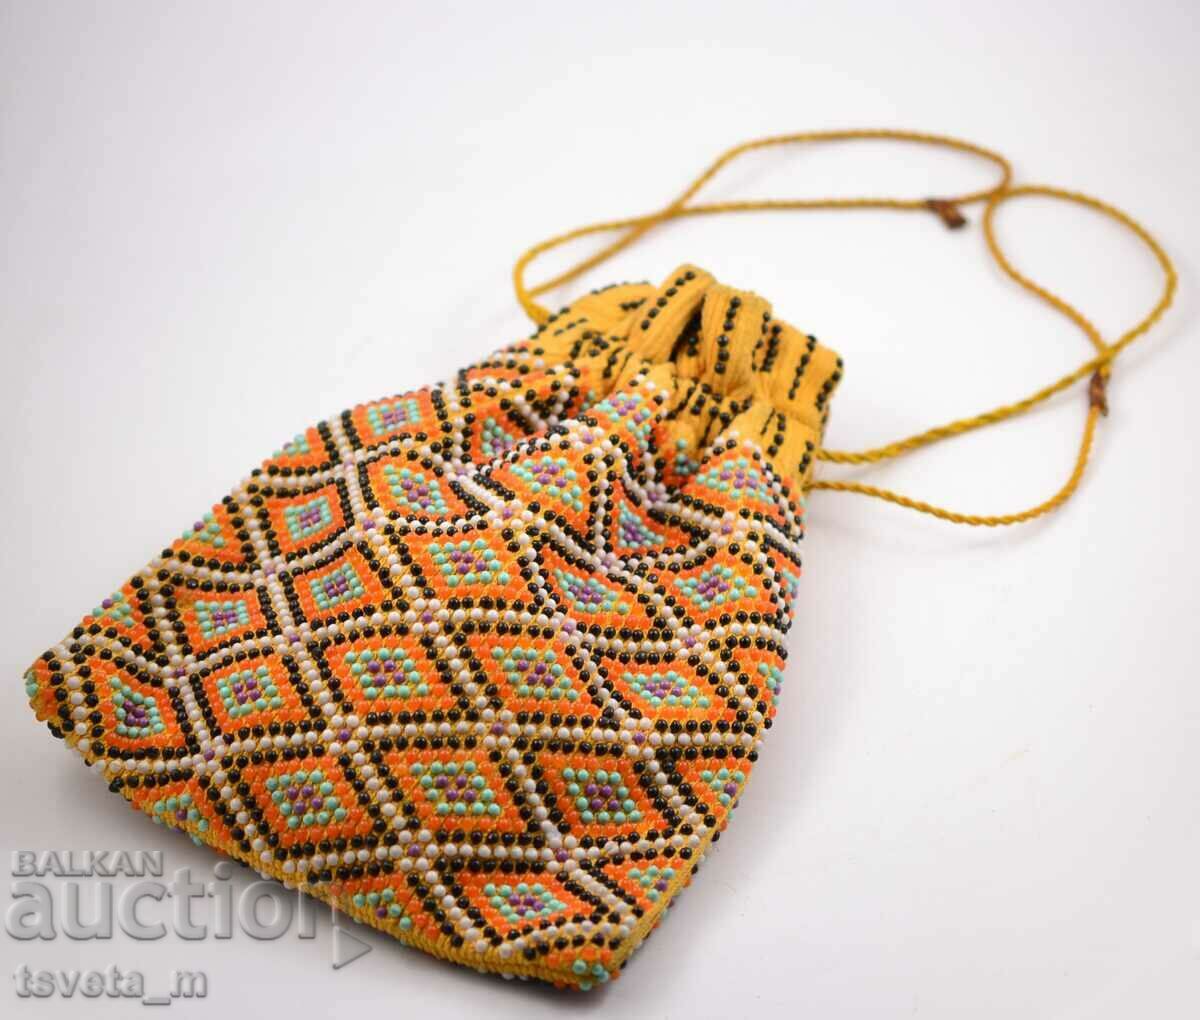 Vintage bag with beads, handmade